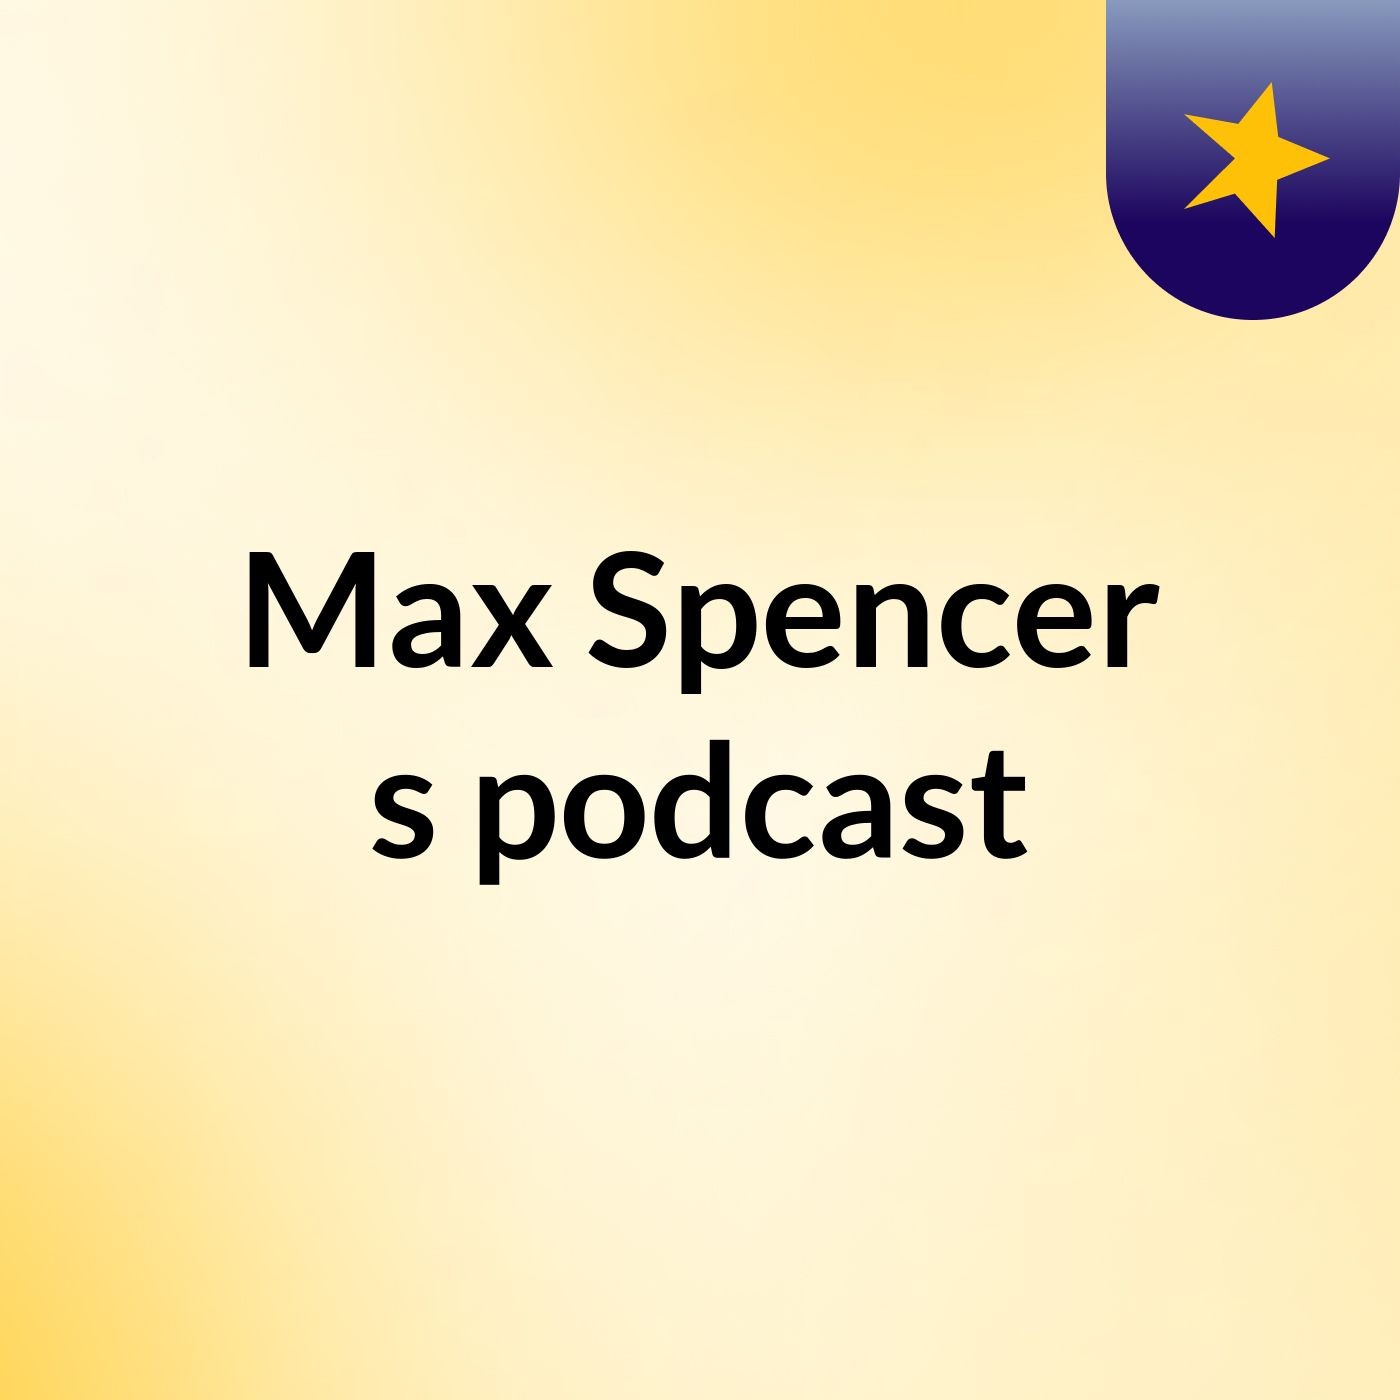 Max Spencer's podcast